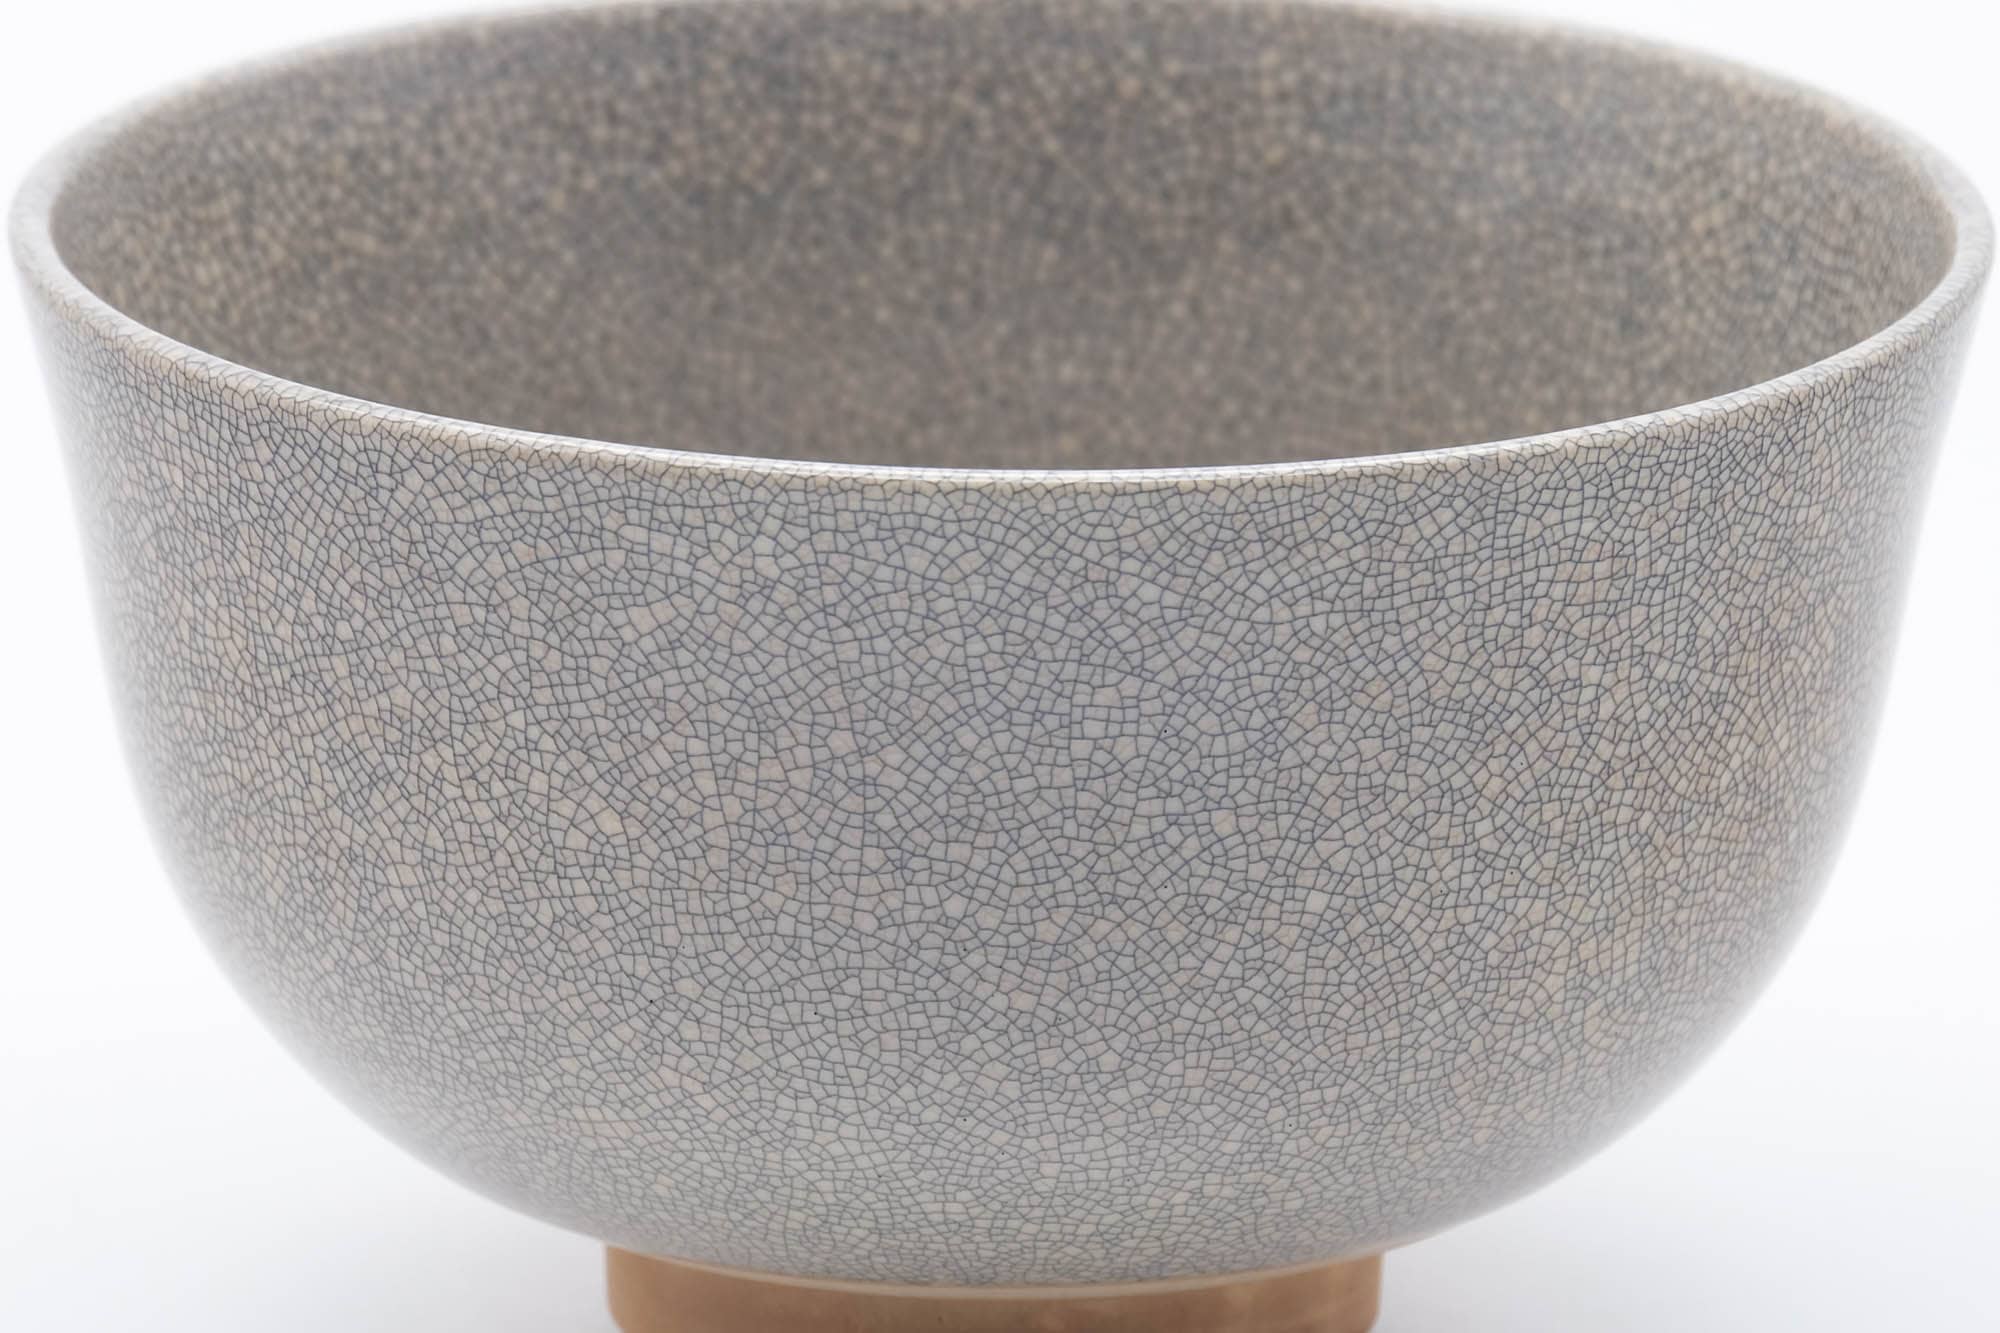 Japanese Matcha Bowl - Crazed Grey Glazed Chawan - 400ml